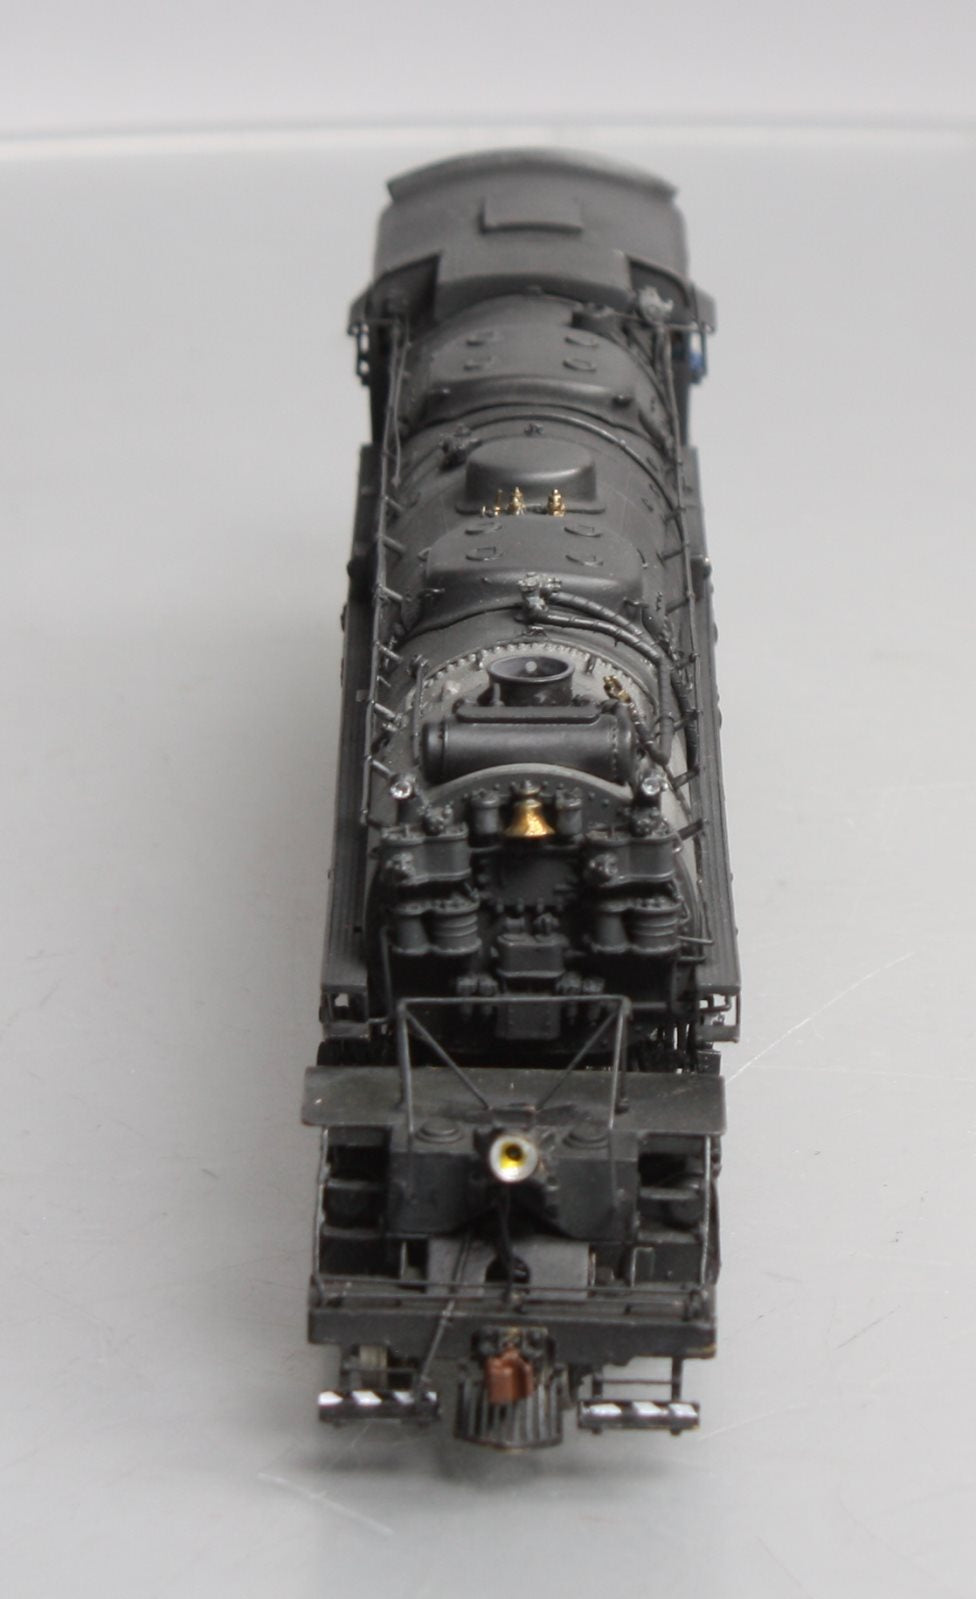 Westside Model HO BRASS DM&IR M4 2-8-8-4 Steam Engine & Tender w/Caboose #225 EX/Box